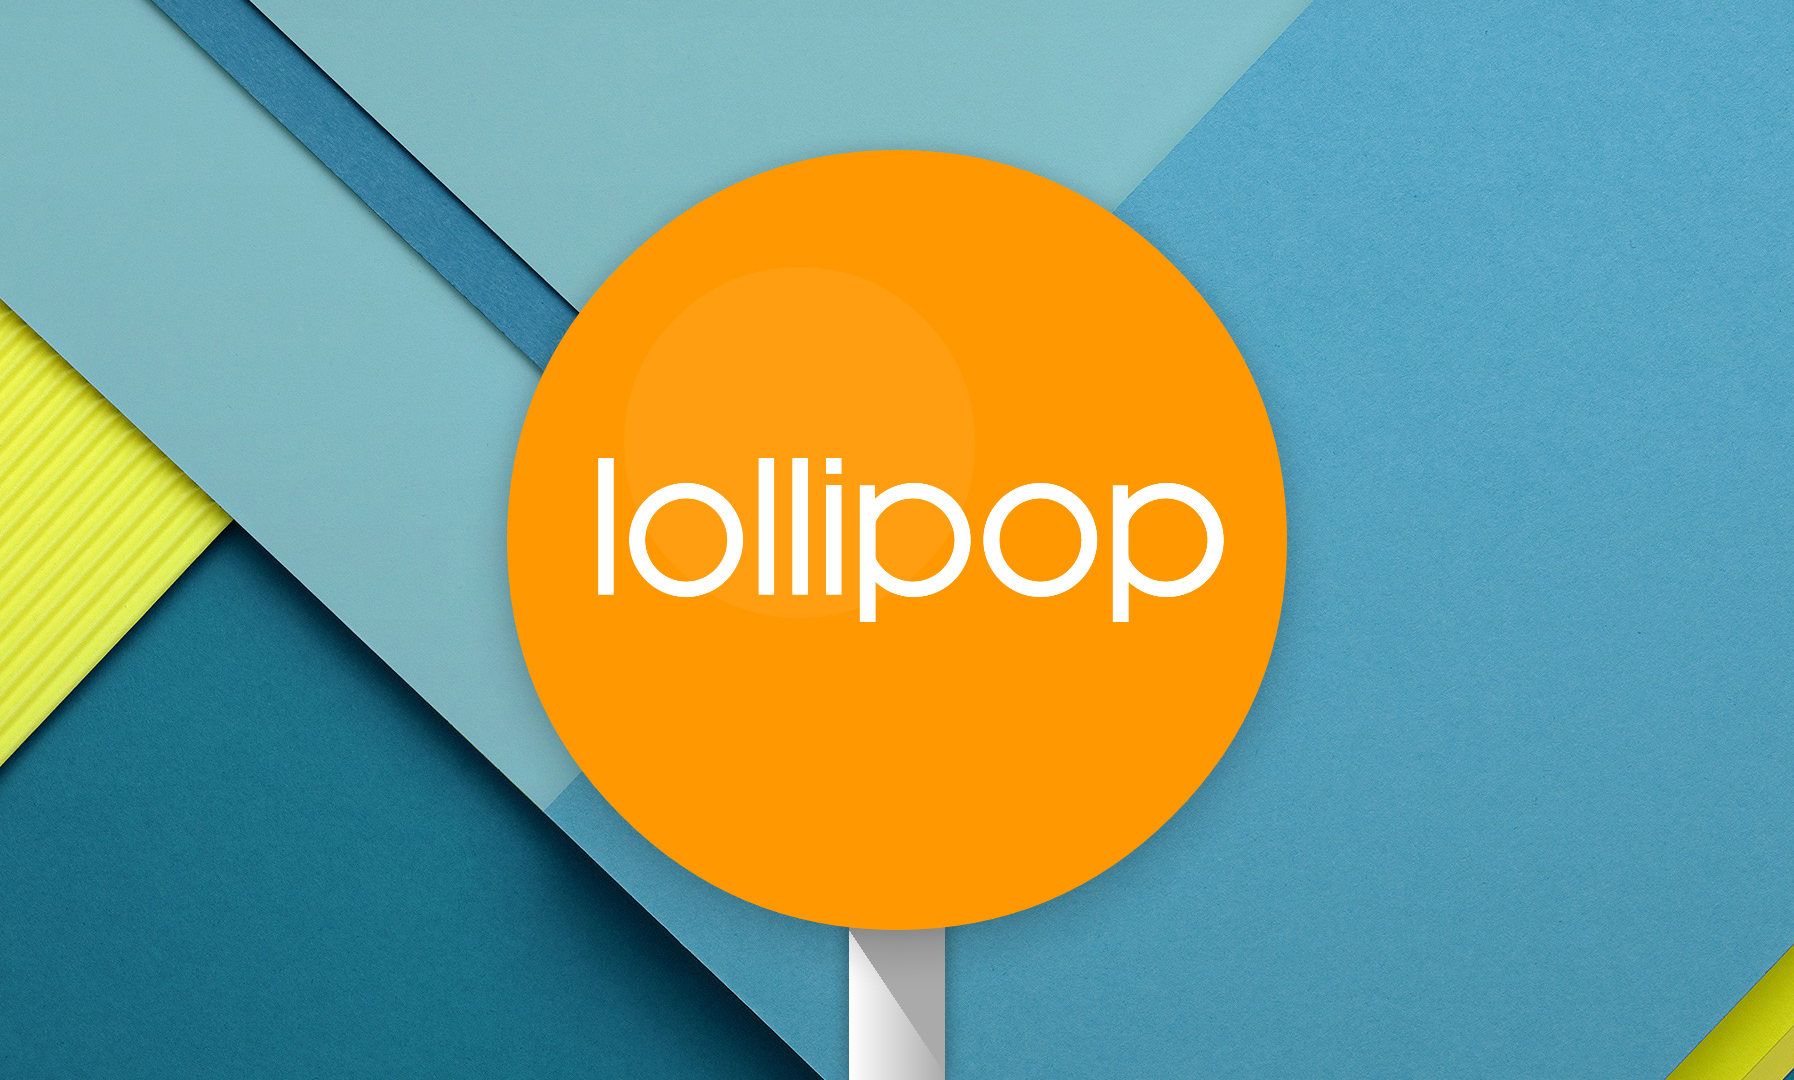 Андроид 5.0 ютуб. Android Lollipop. Android 5. Android 5.0 Lollipop logo. Android 5.0 Lollipop PNG.